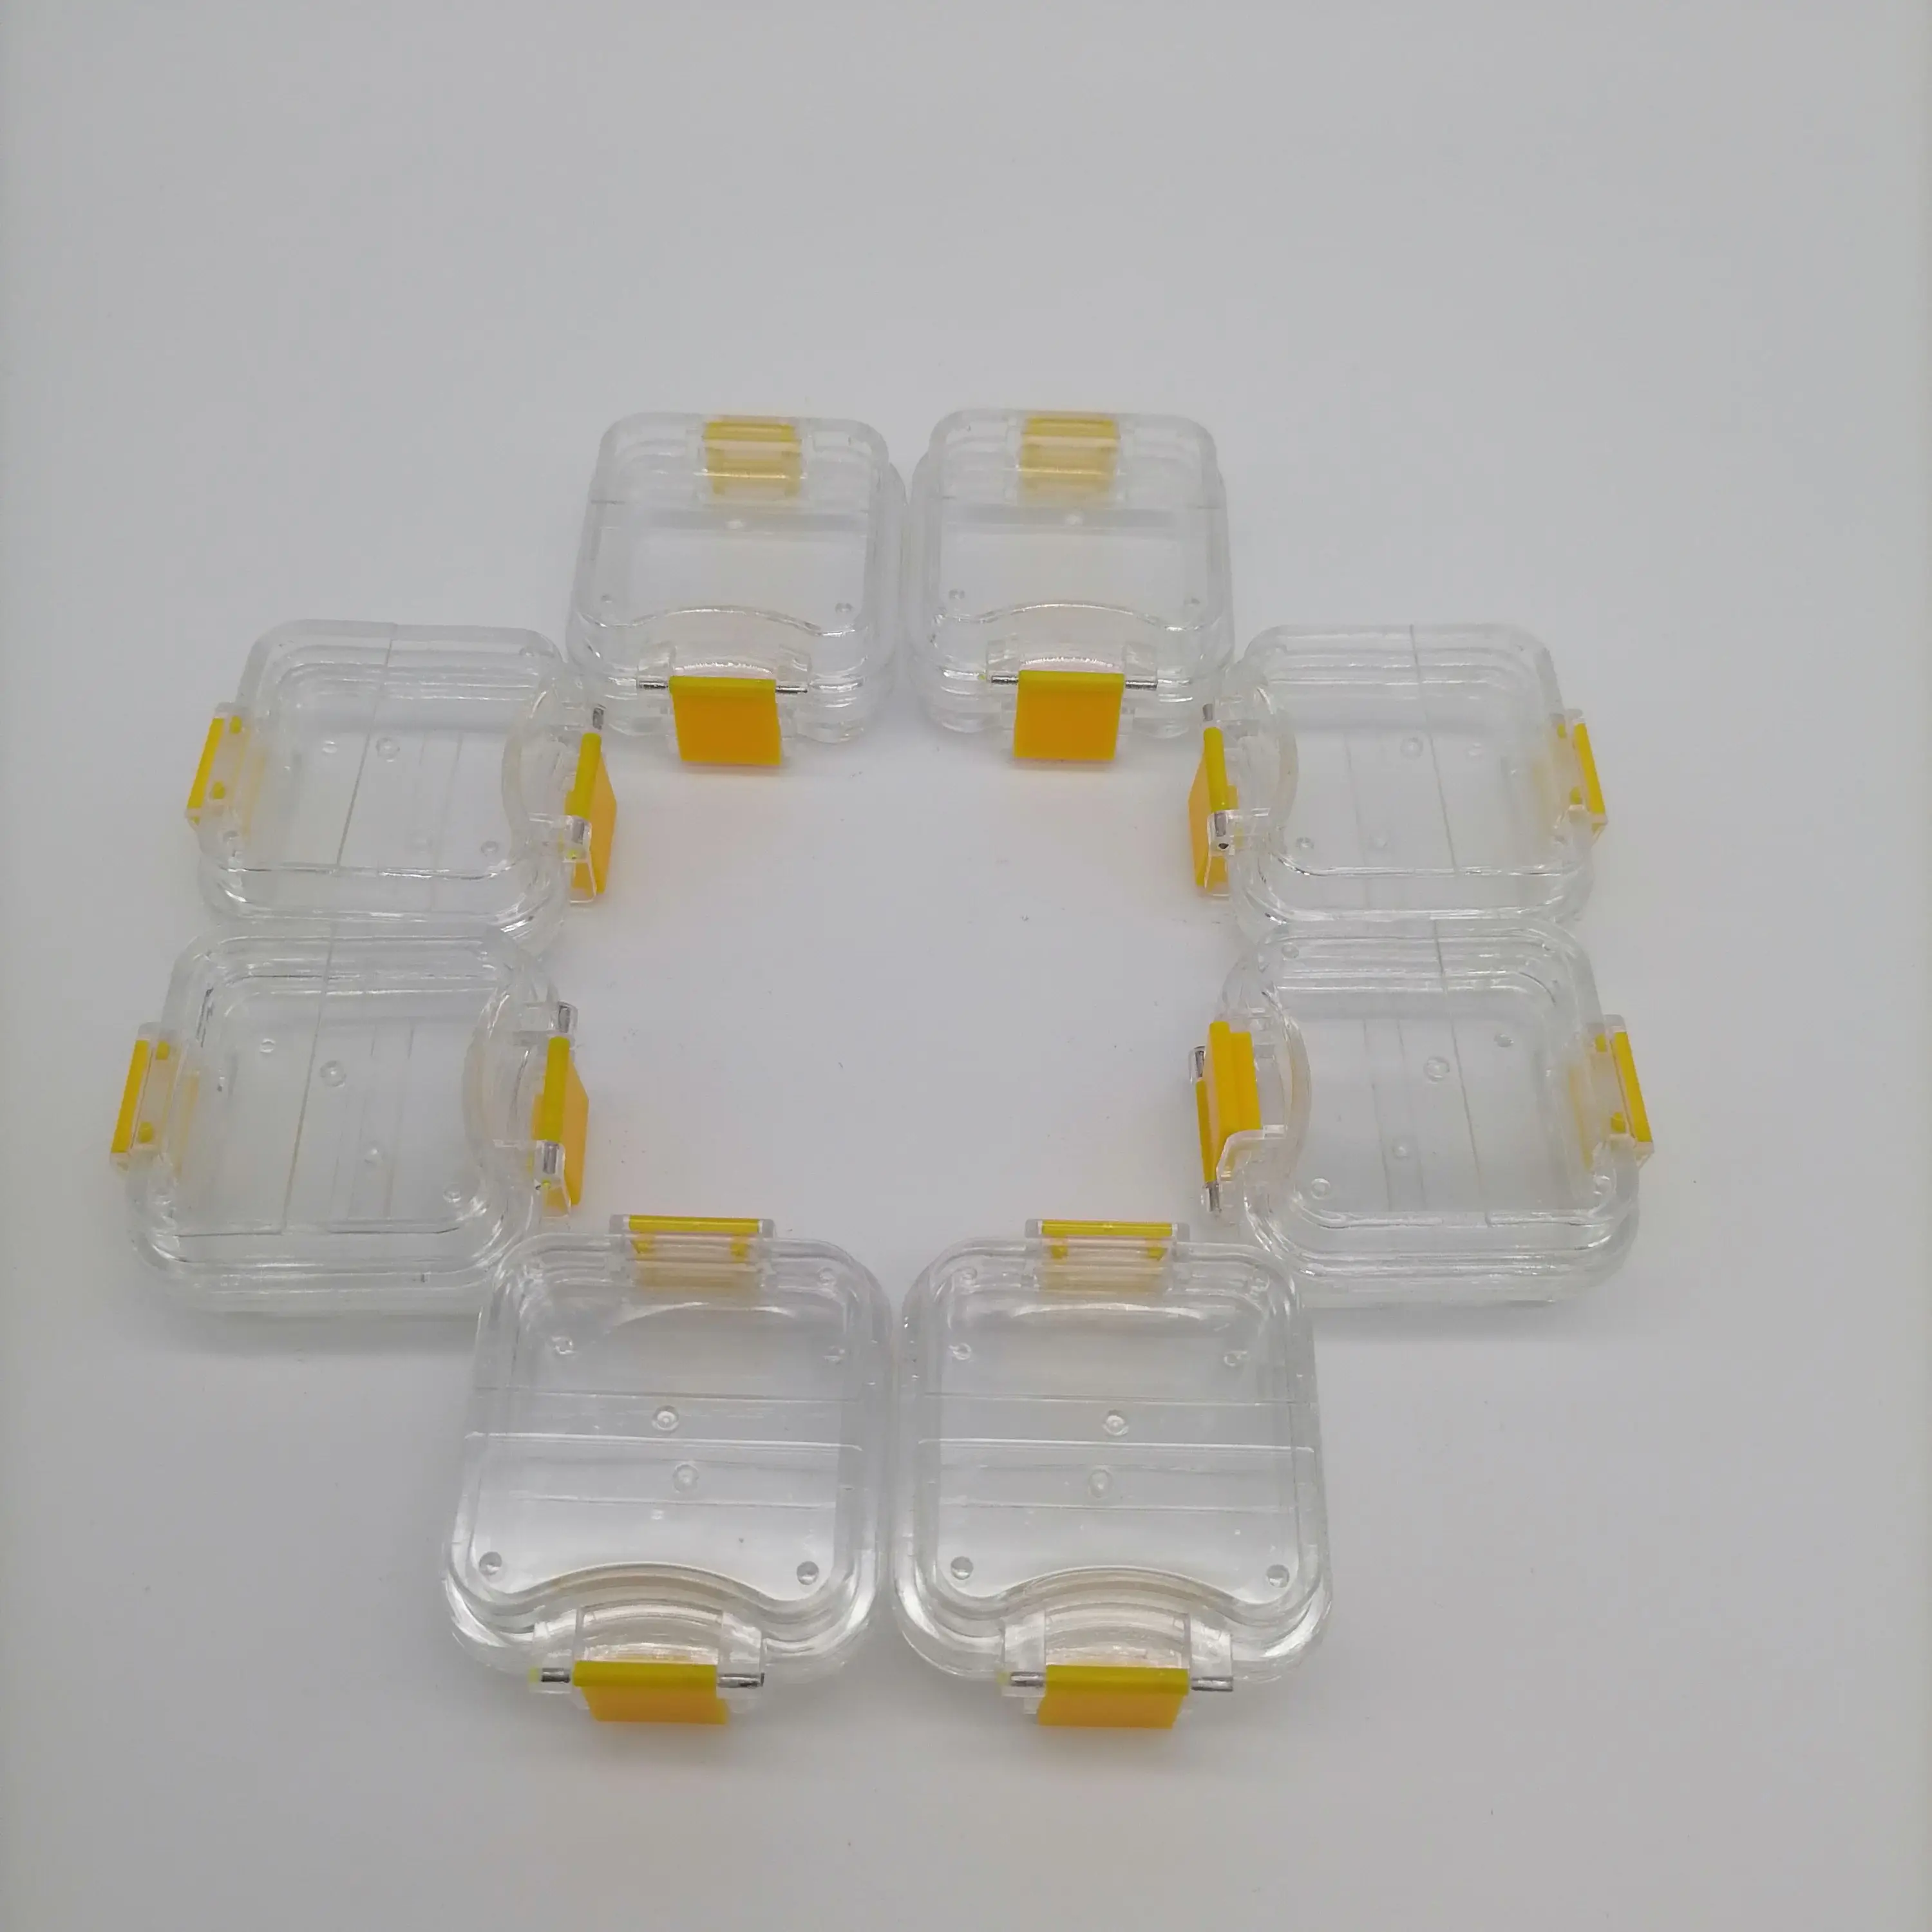 https://ae01.alicdn.com/kf/H90e3baa784ce4ec98f003614a43b6d2b7/20pcs-Clear-Film-Denture-Teeth-Storage-Box-Clear-Membrane-Box-For-Dental-Lab-Packing-Material.jpg